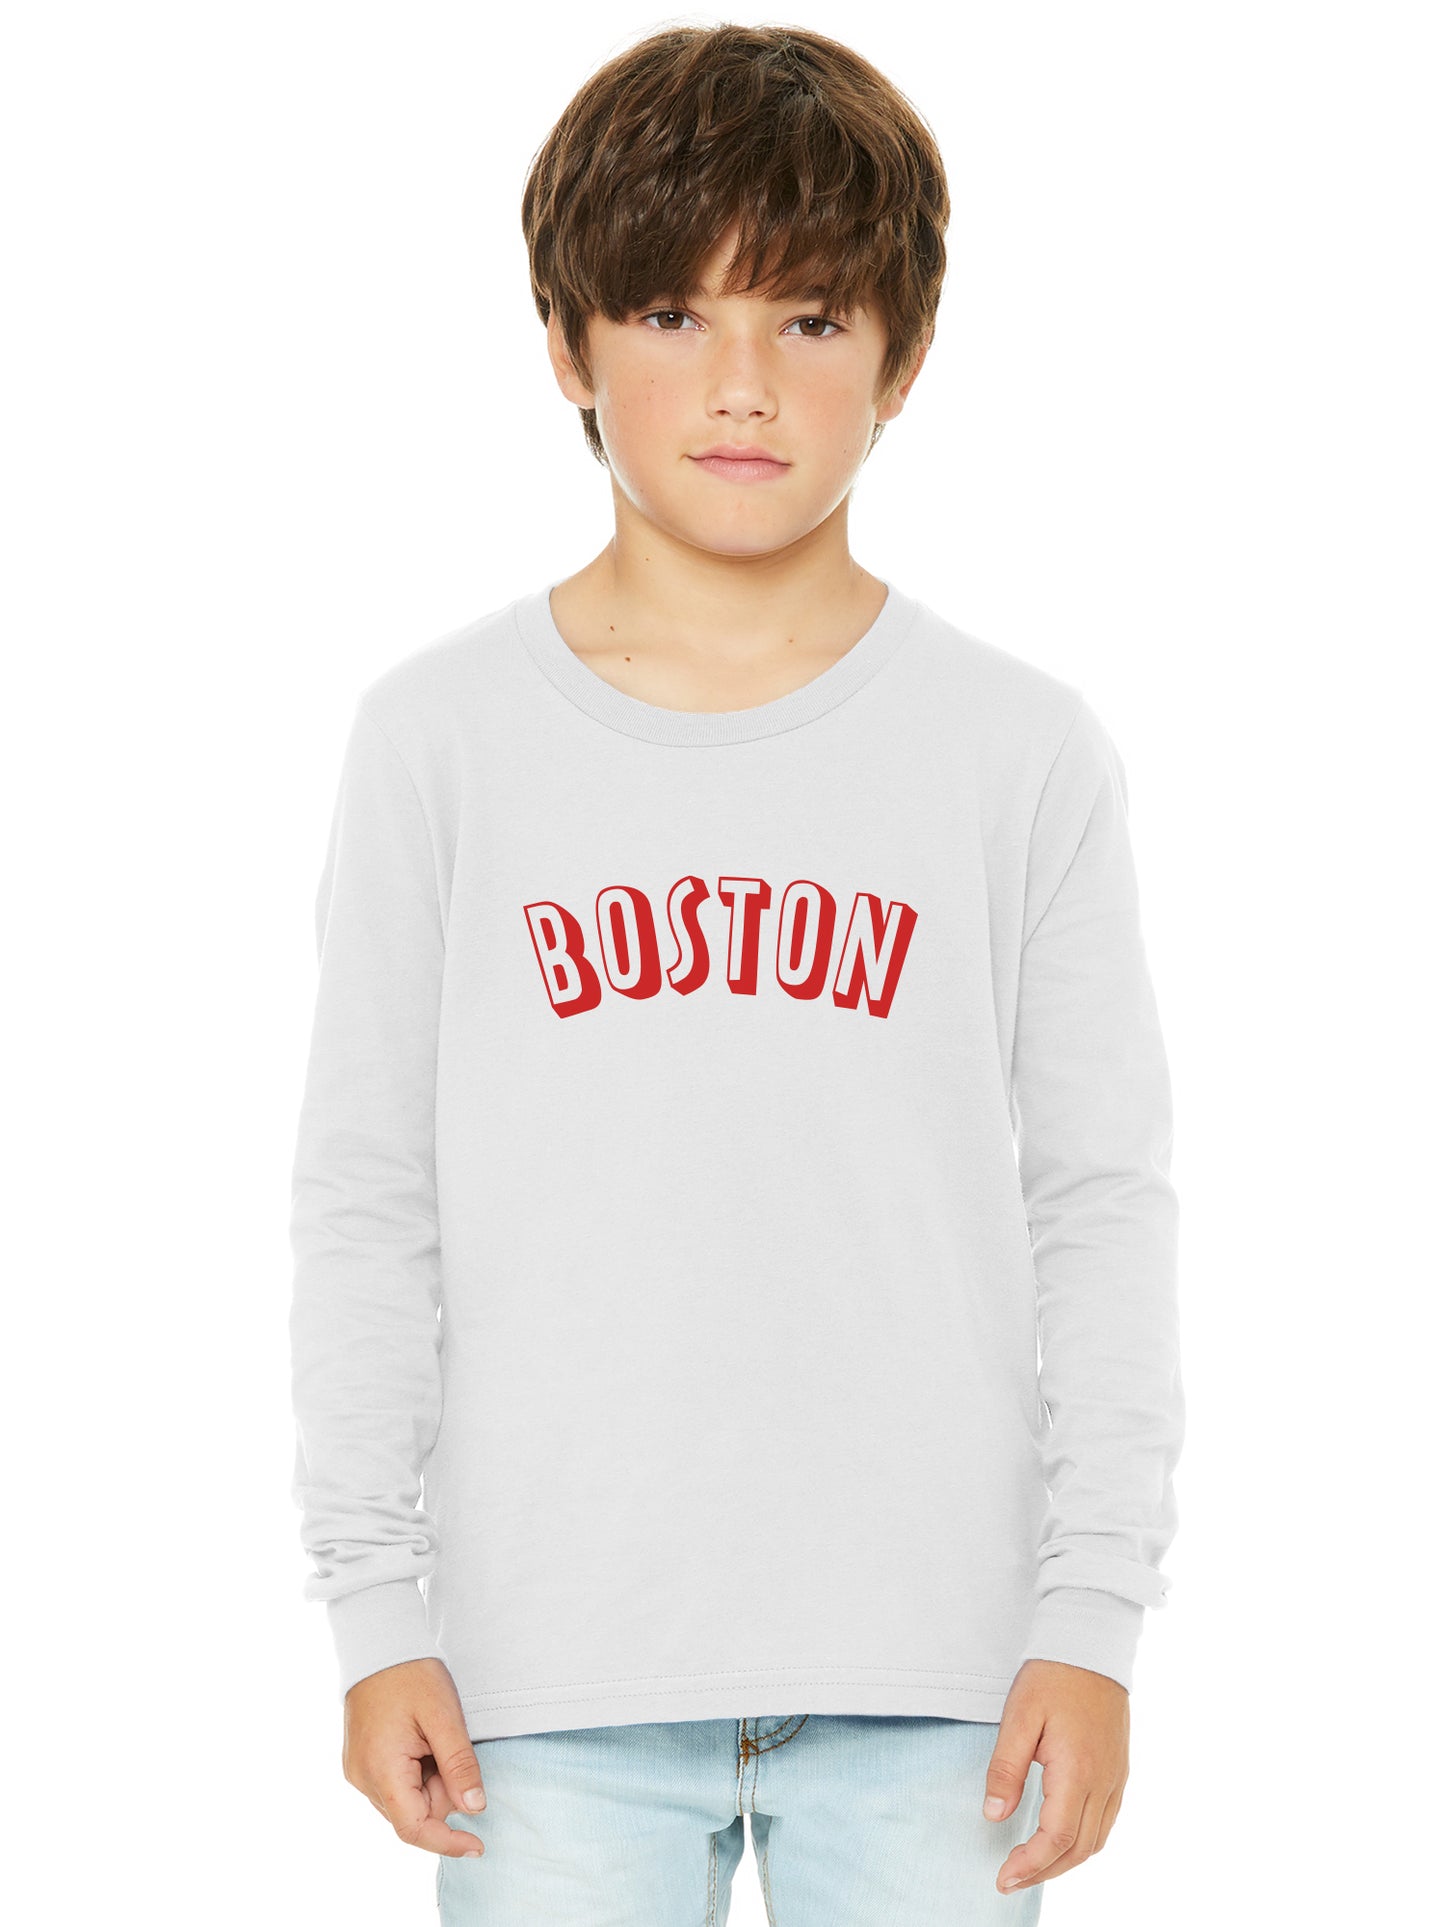 Daxton Youth Long Sleeve Boston Basic Tshirt